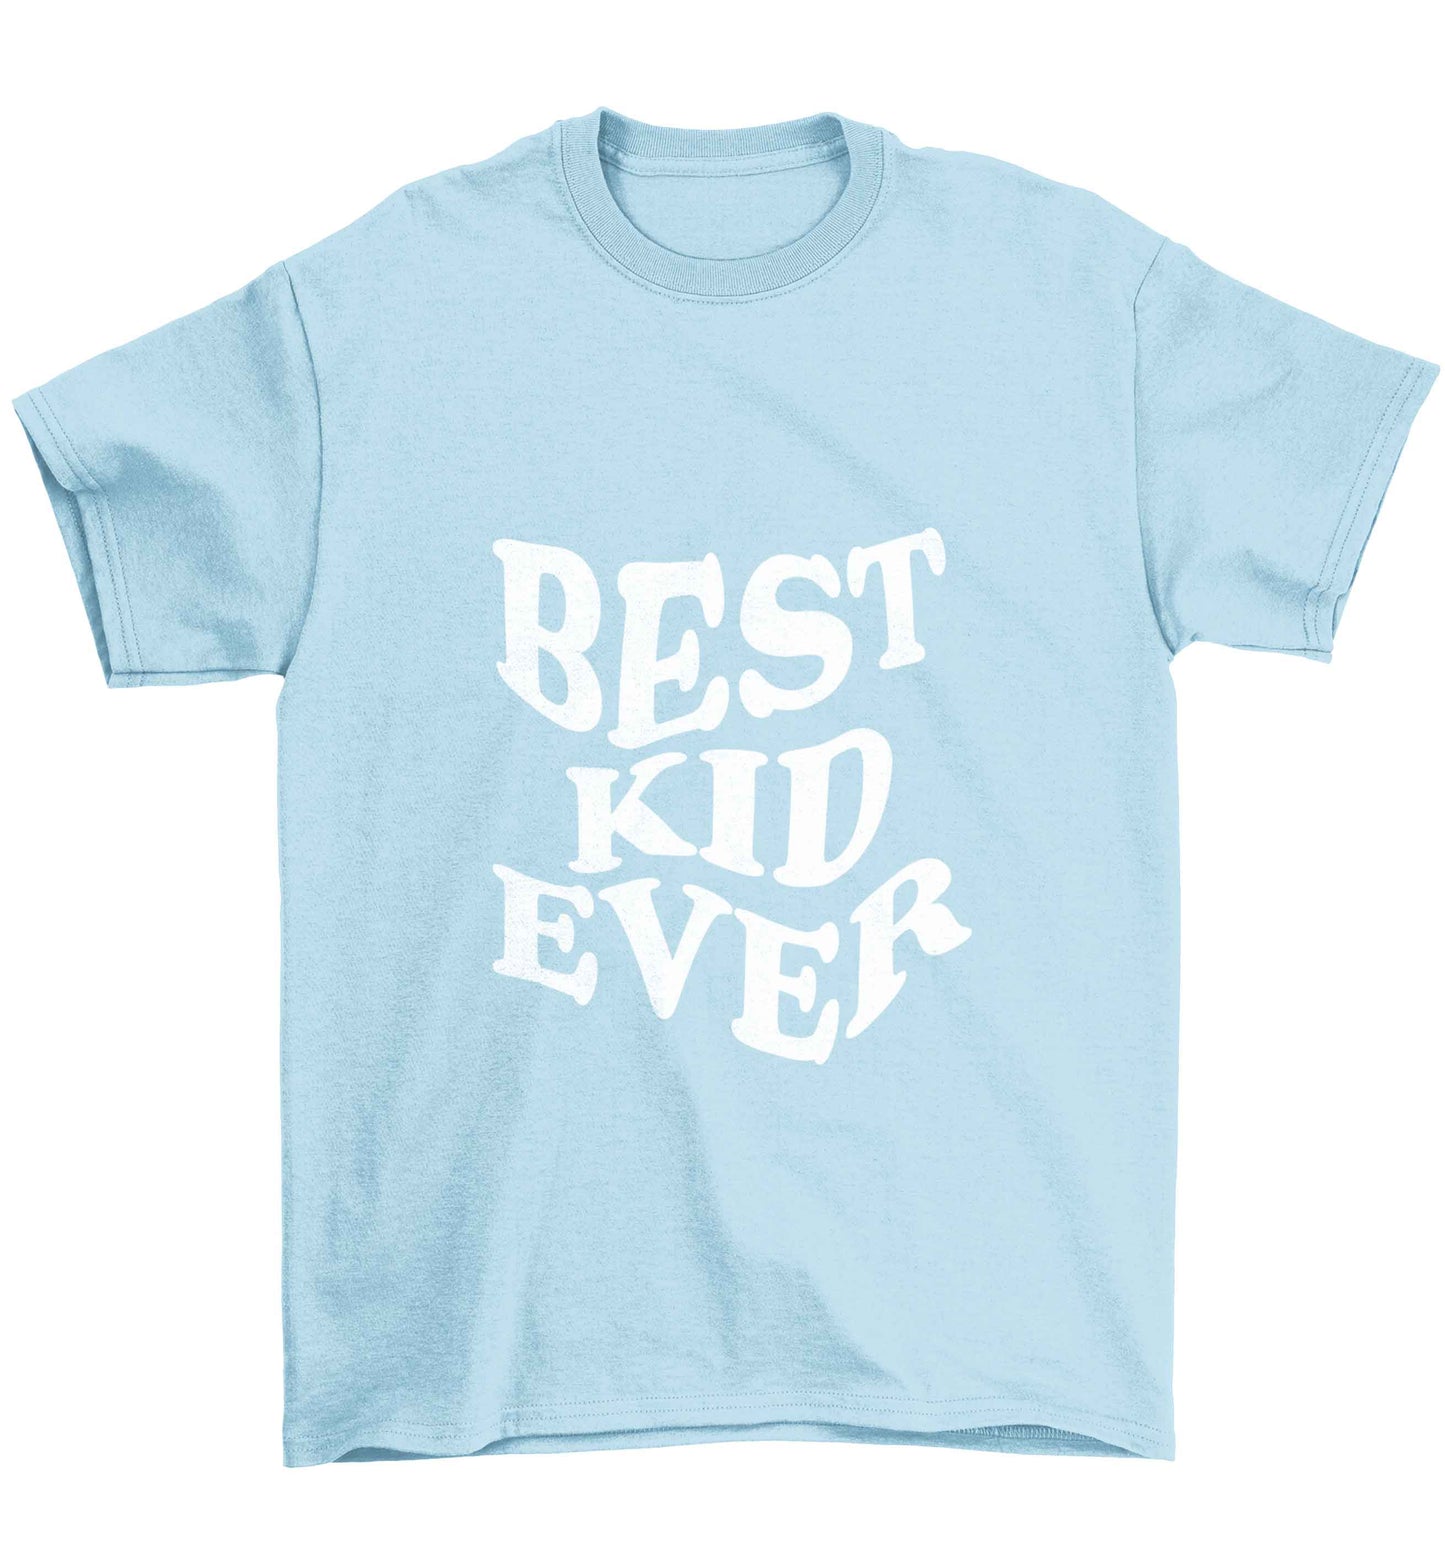 Best kid ever Children's light blue Tshirt 12-13 Years